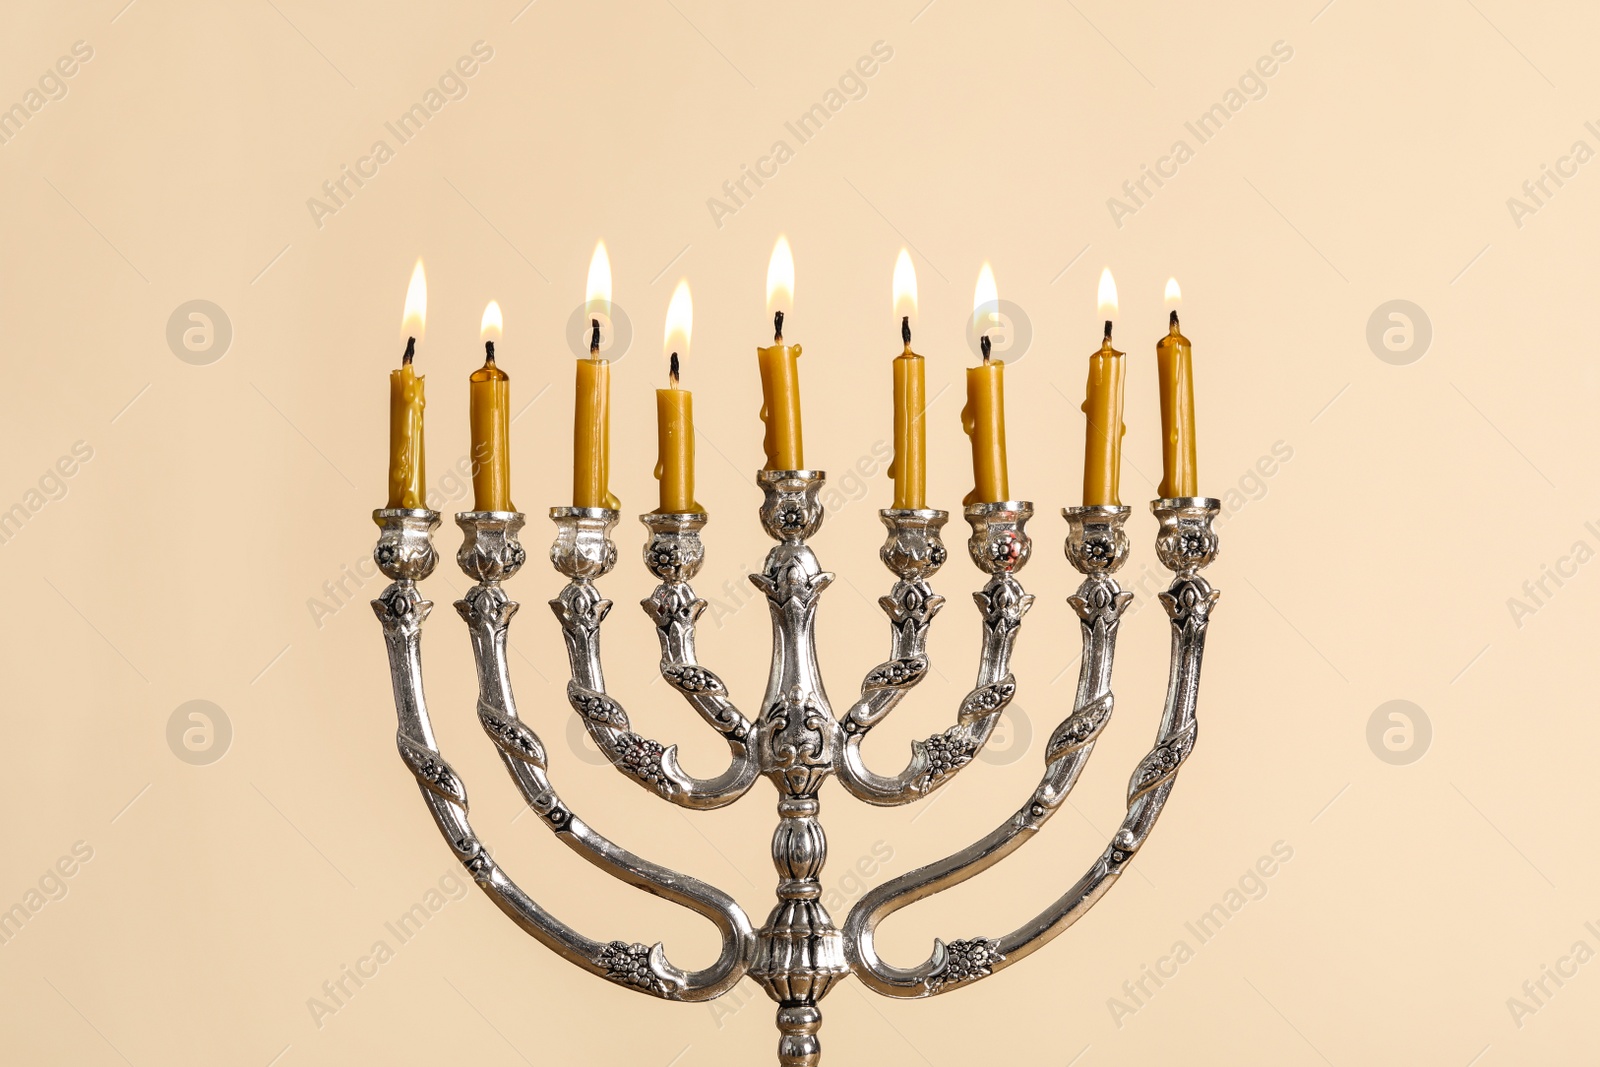 Photo of Silver menorah with burning candles on beige background. Hanukkah celebration